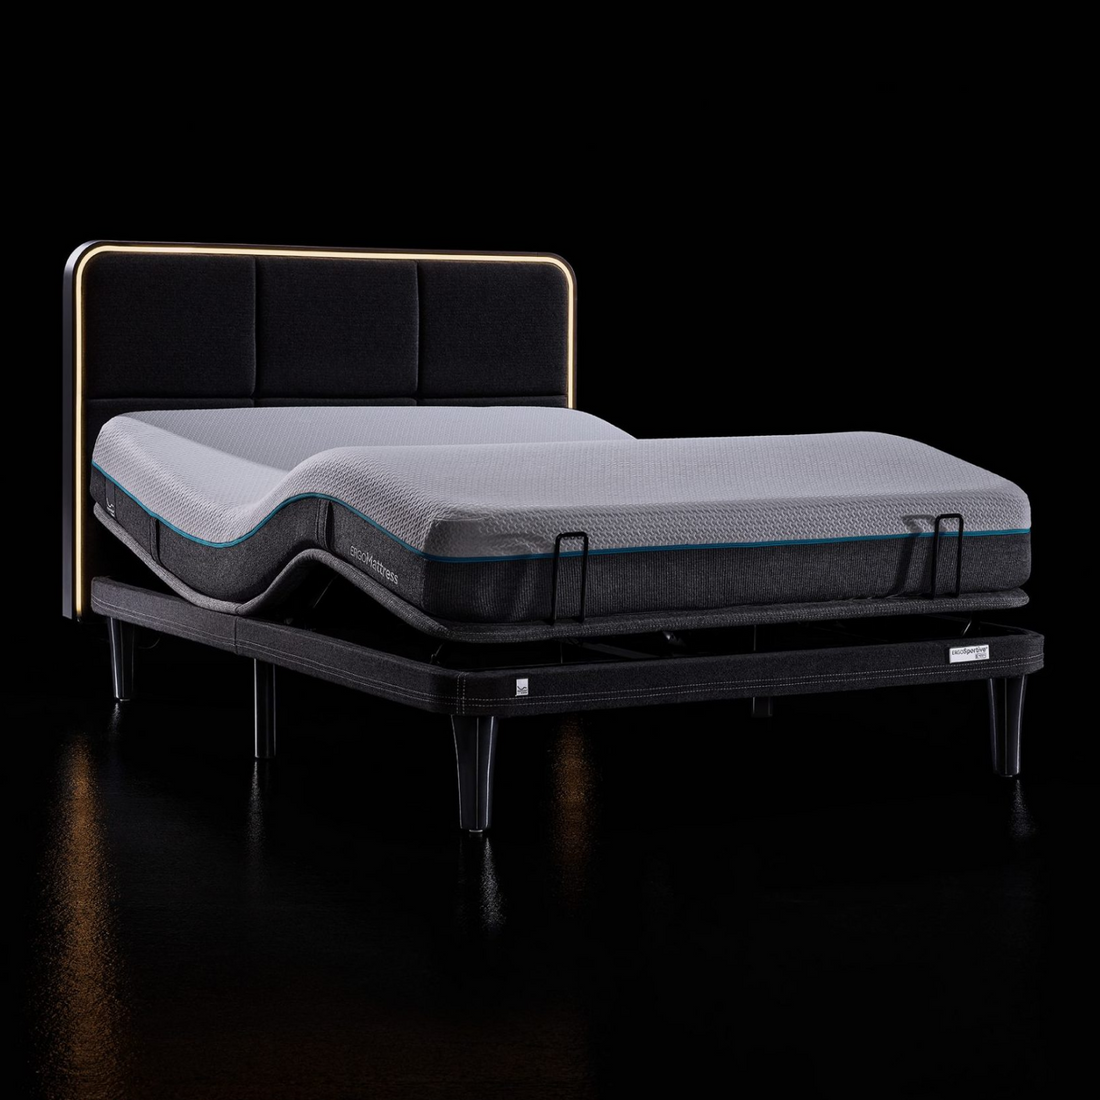 ErgoSportive Adjustable bed in Zero-G